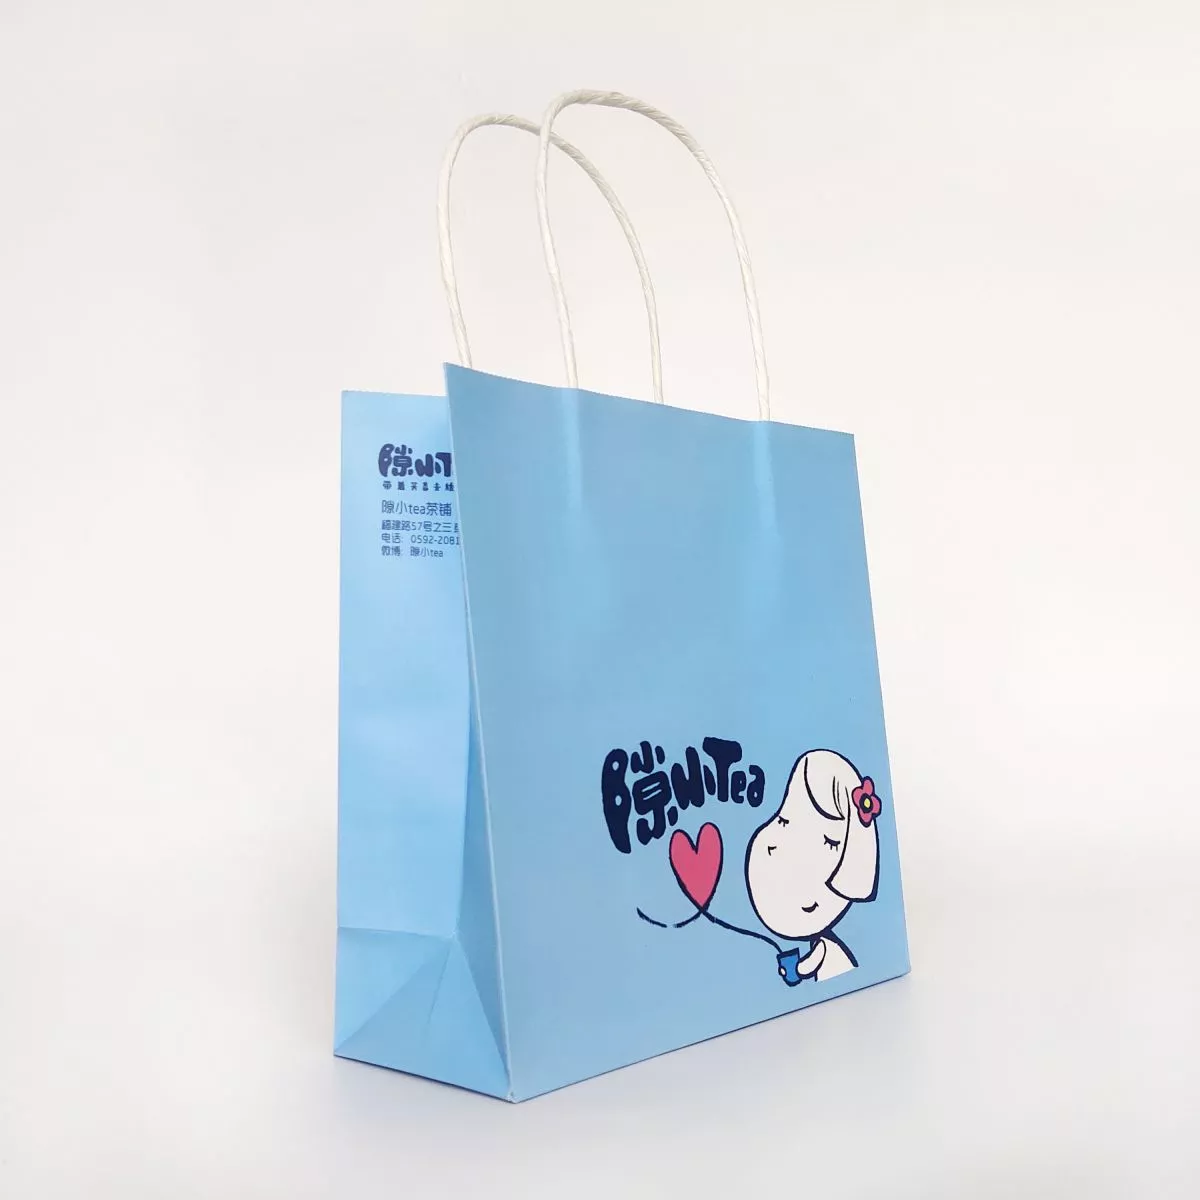 GB021 Design Cute Paper Shopping Bag for Tea